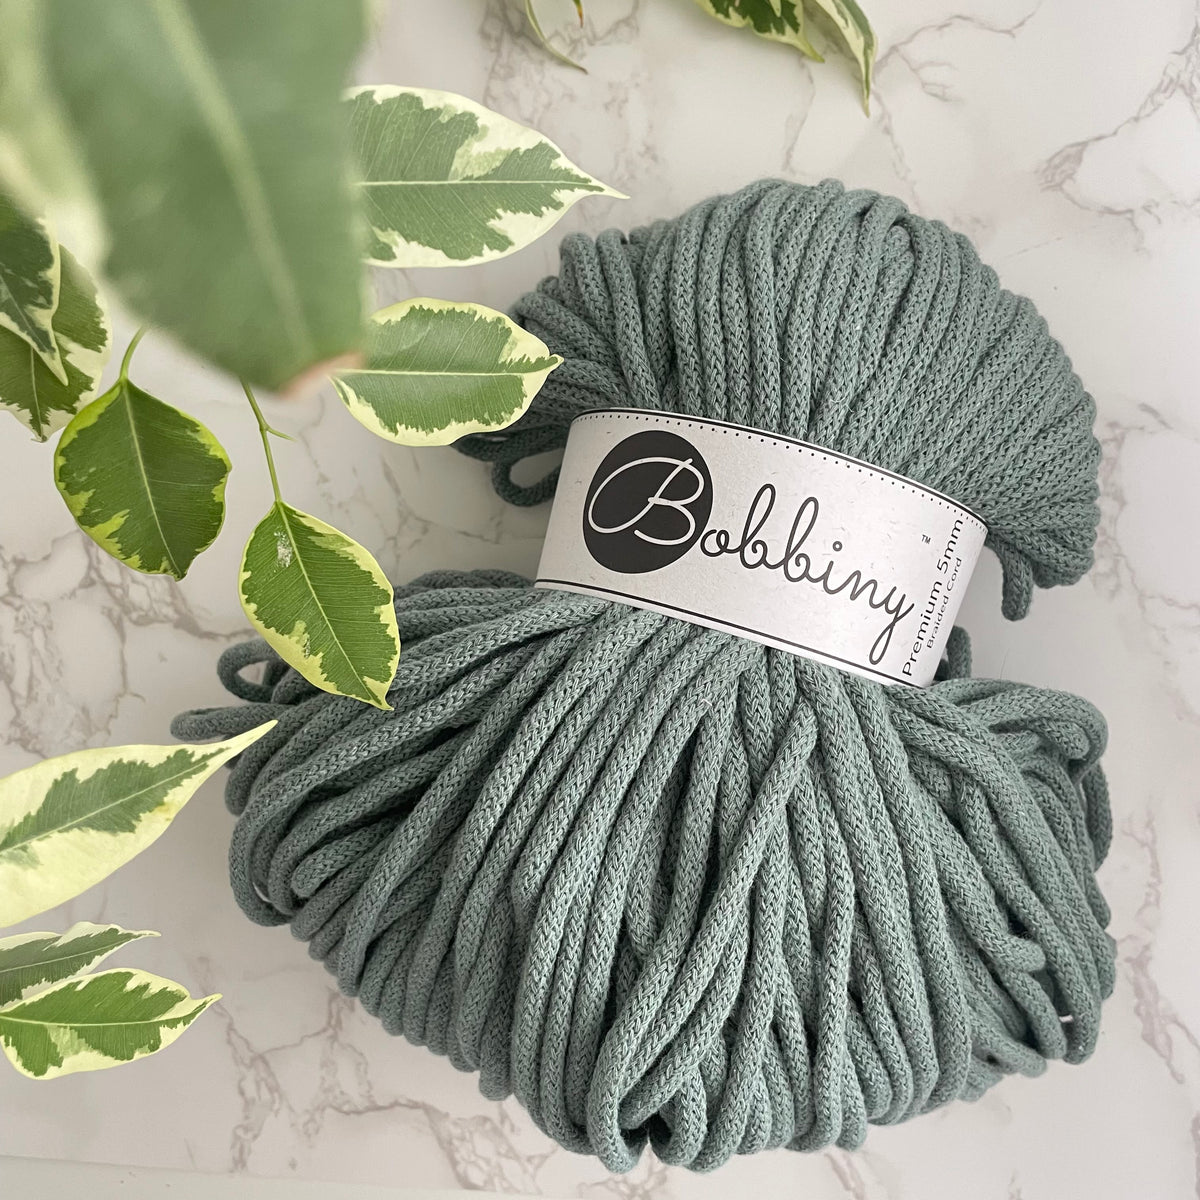 Bobbiny 9mm Cotton String – The Ivy Studio